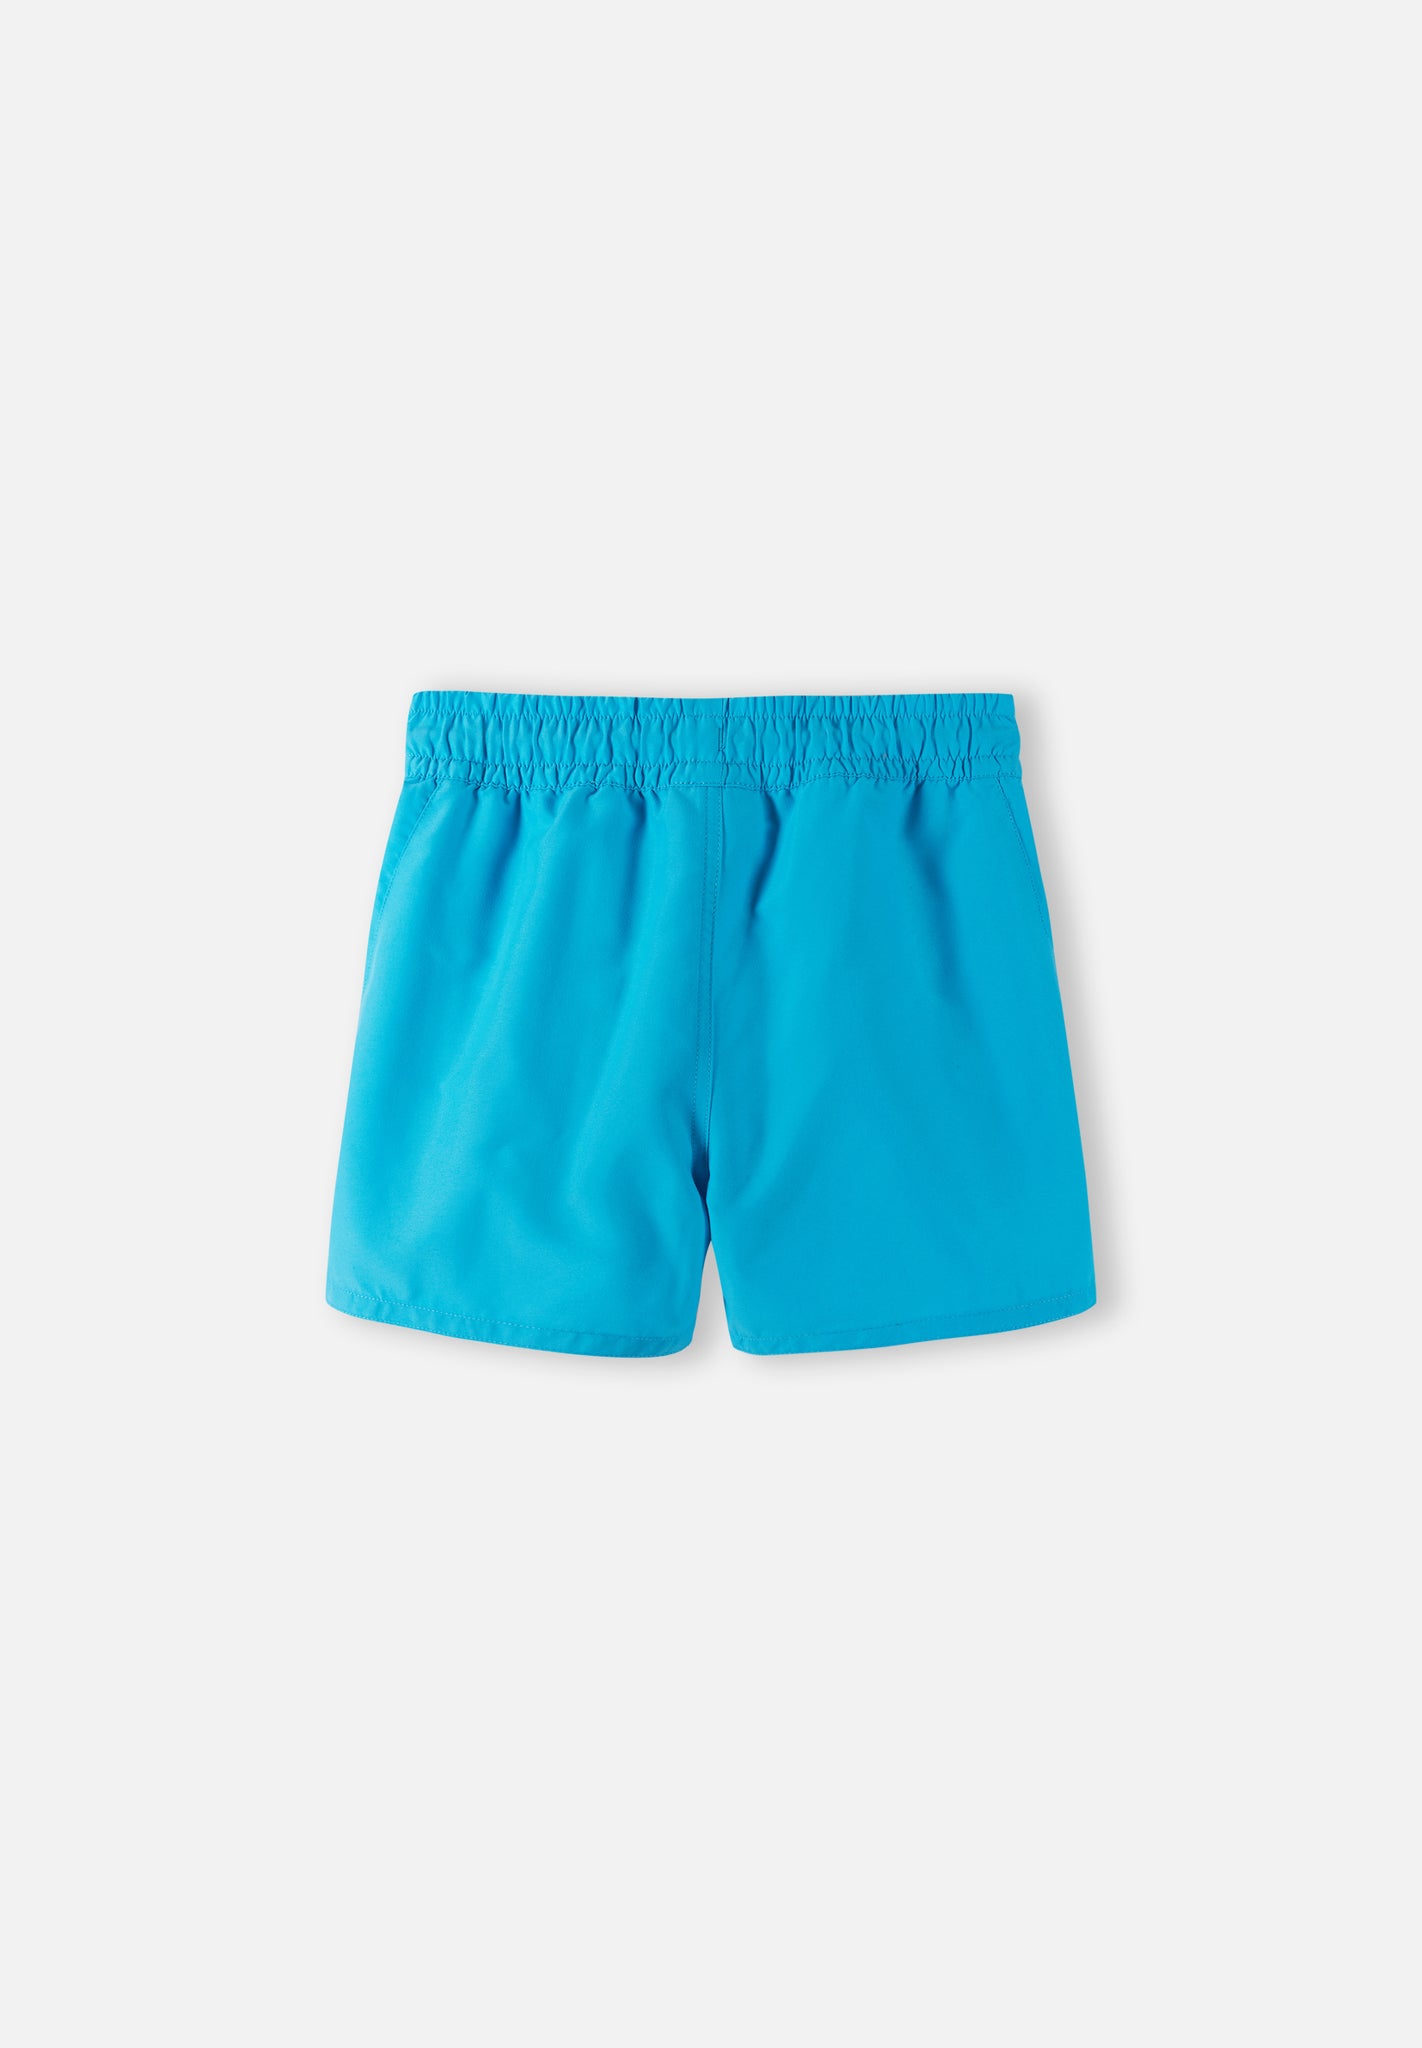 Palmu UV <tc>Reima</tc>  shorts